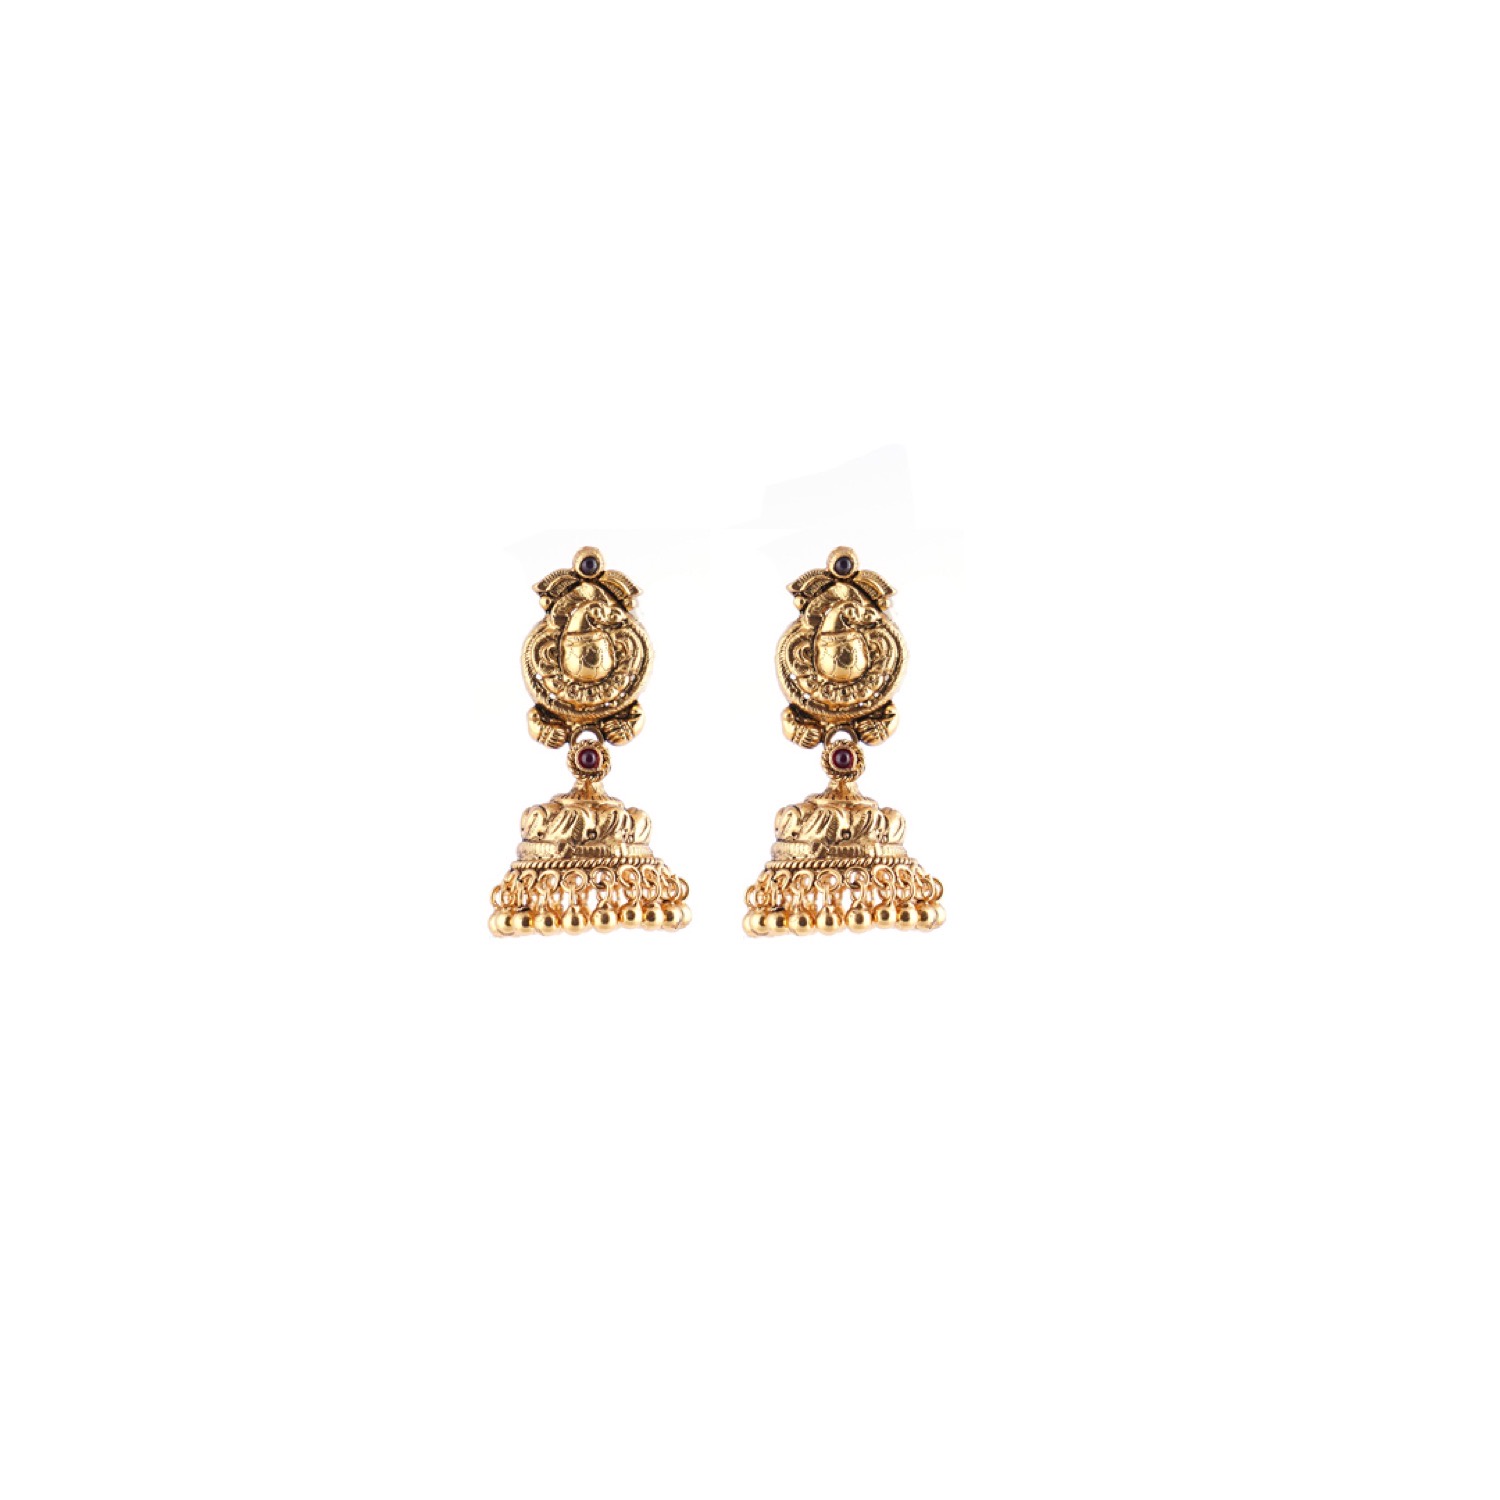 varam_earrings_102022_parrot_design_gold_coated_jumkha_silver_earrings-1